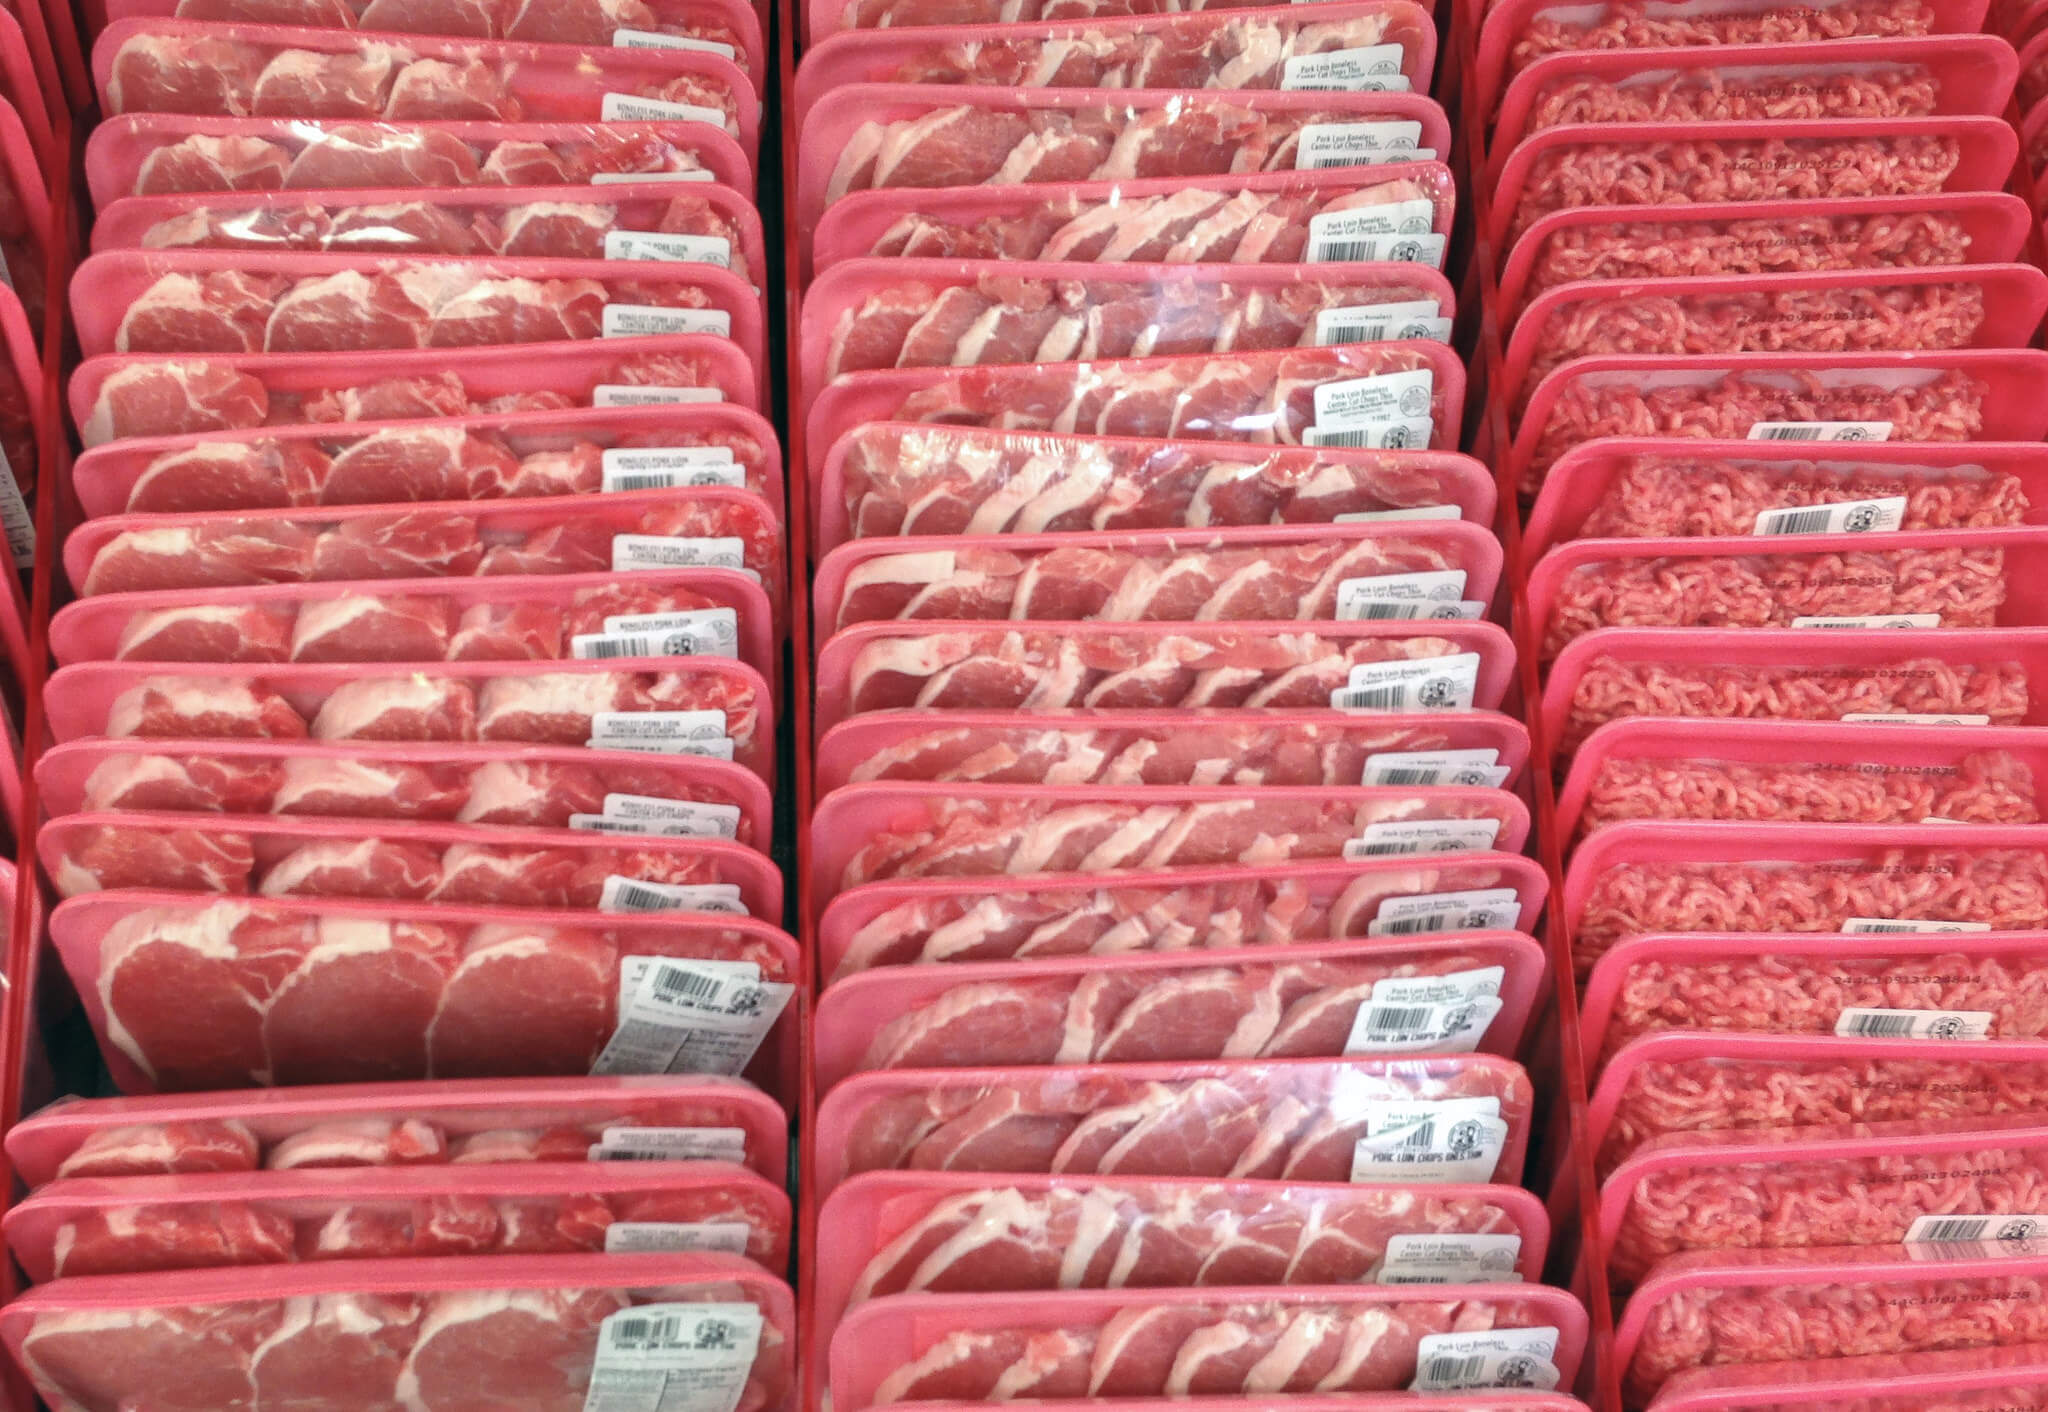 Supermarket meat